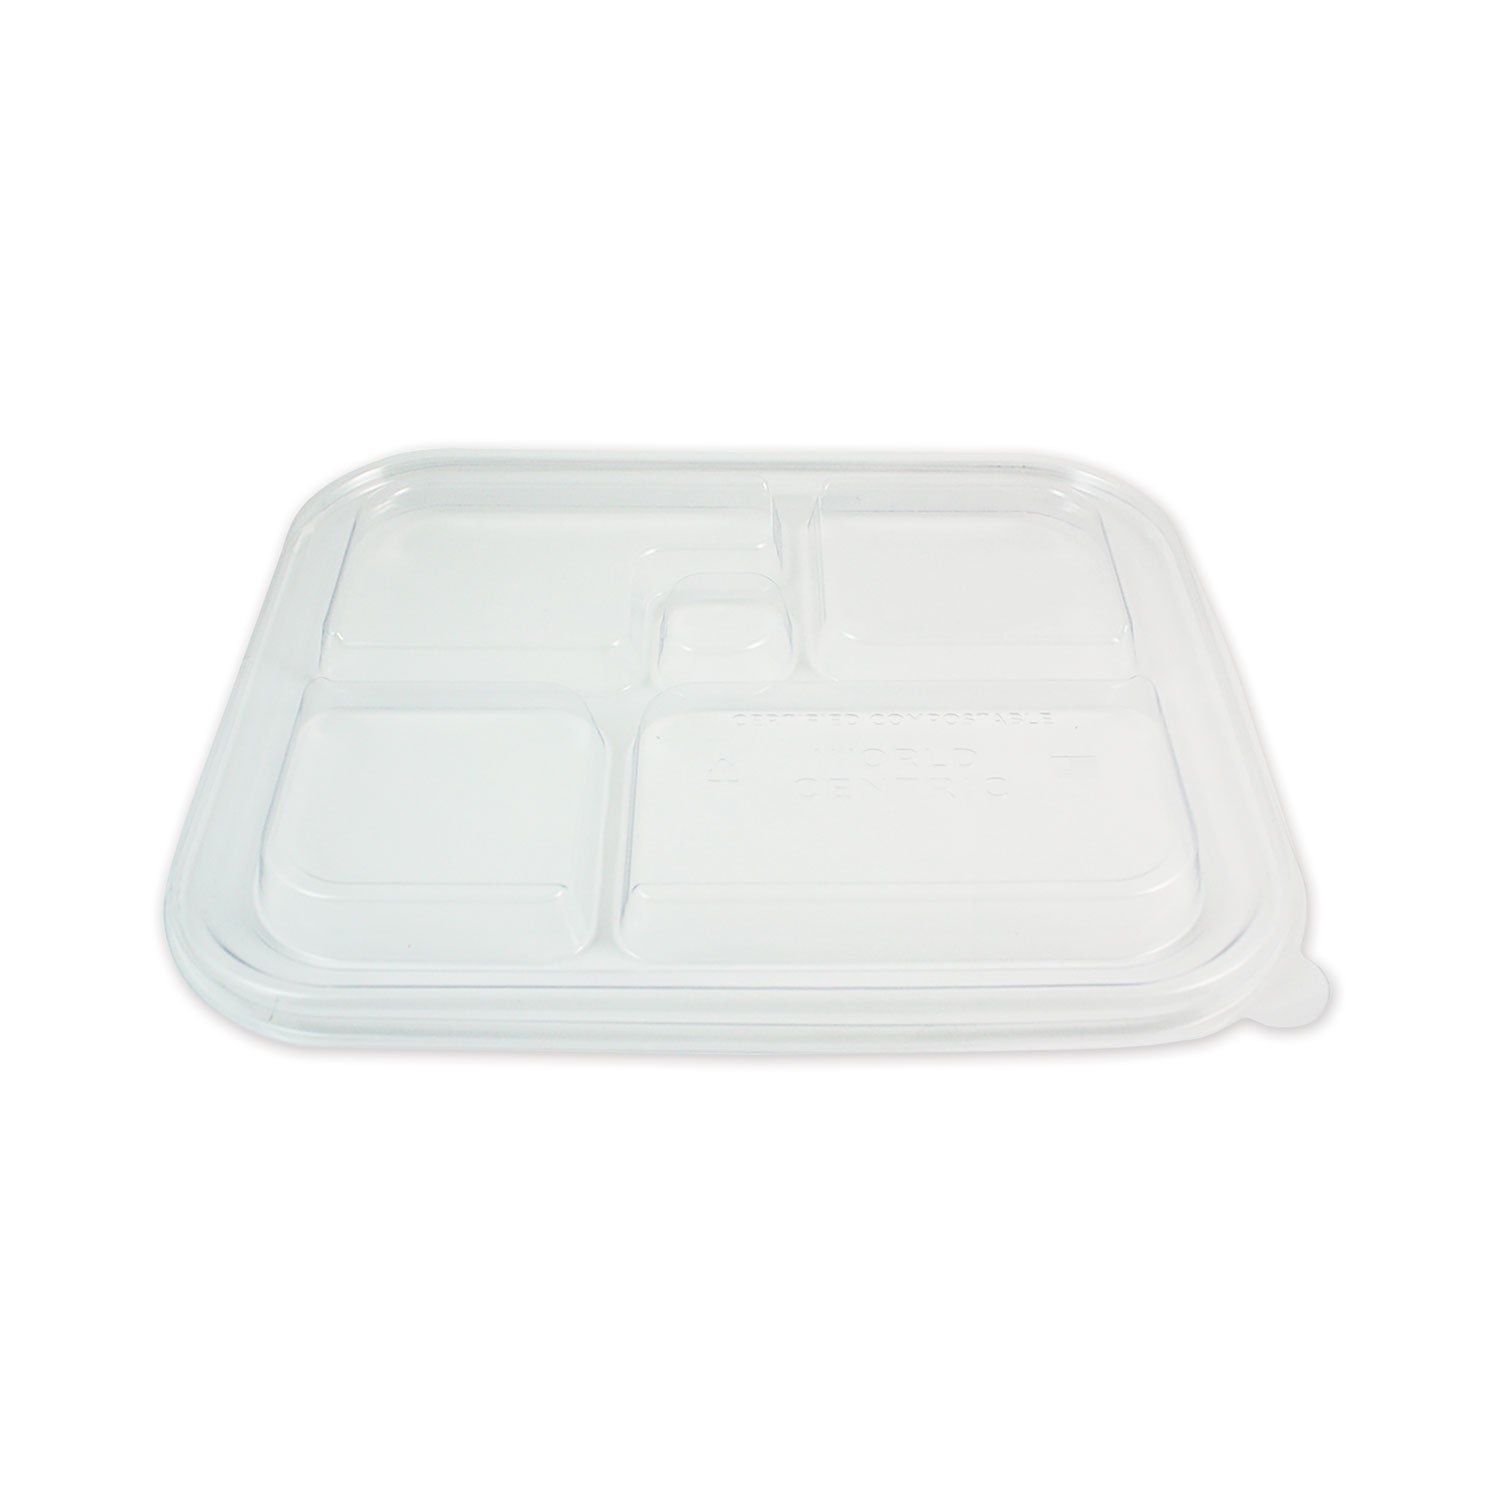 pla-lids-for-fiber-bento-box-containers-five-compartments-121-x-98-x-08-clear-plastic-300-carton_wortrlcsbb - 1